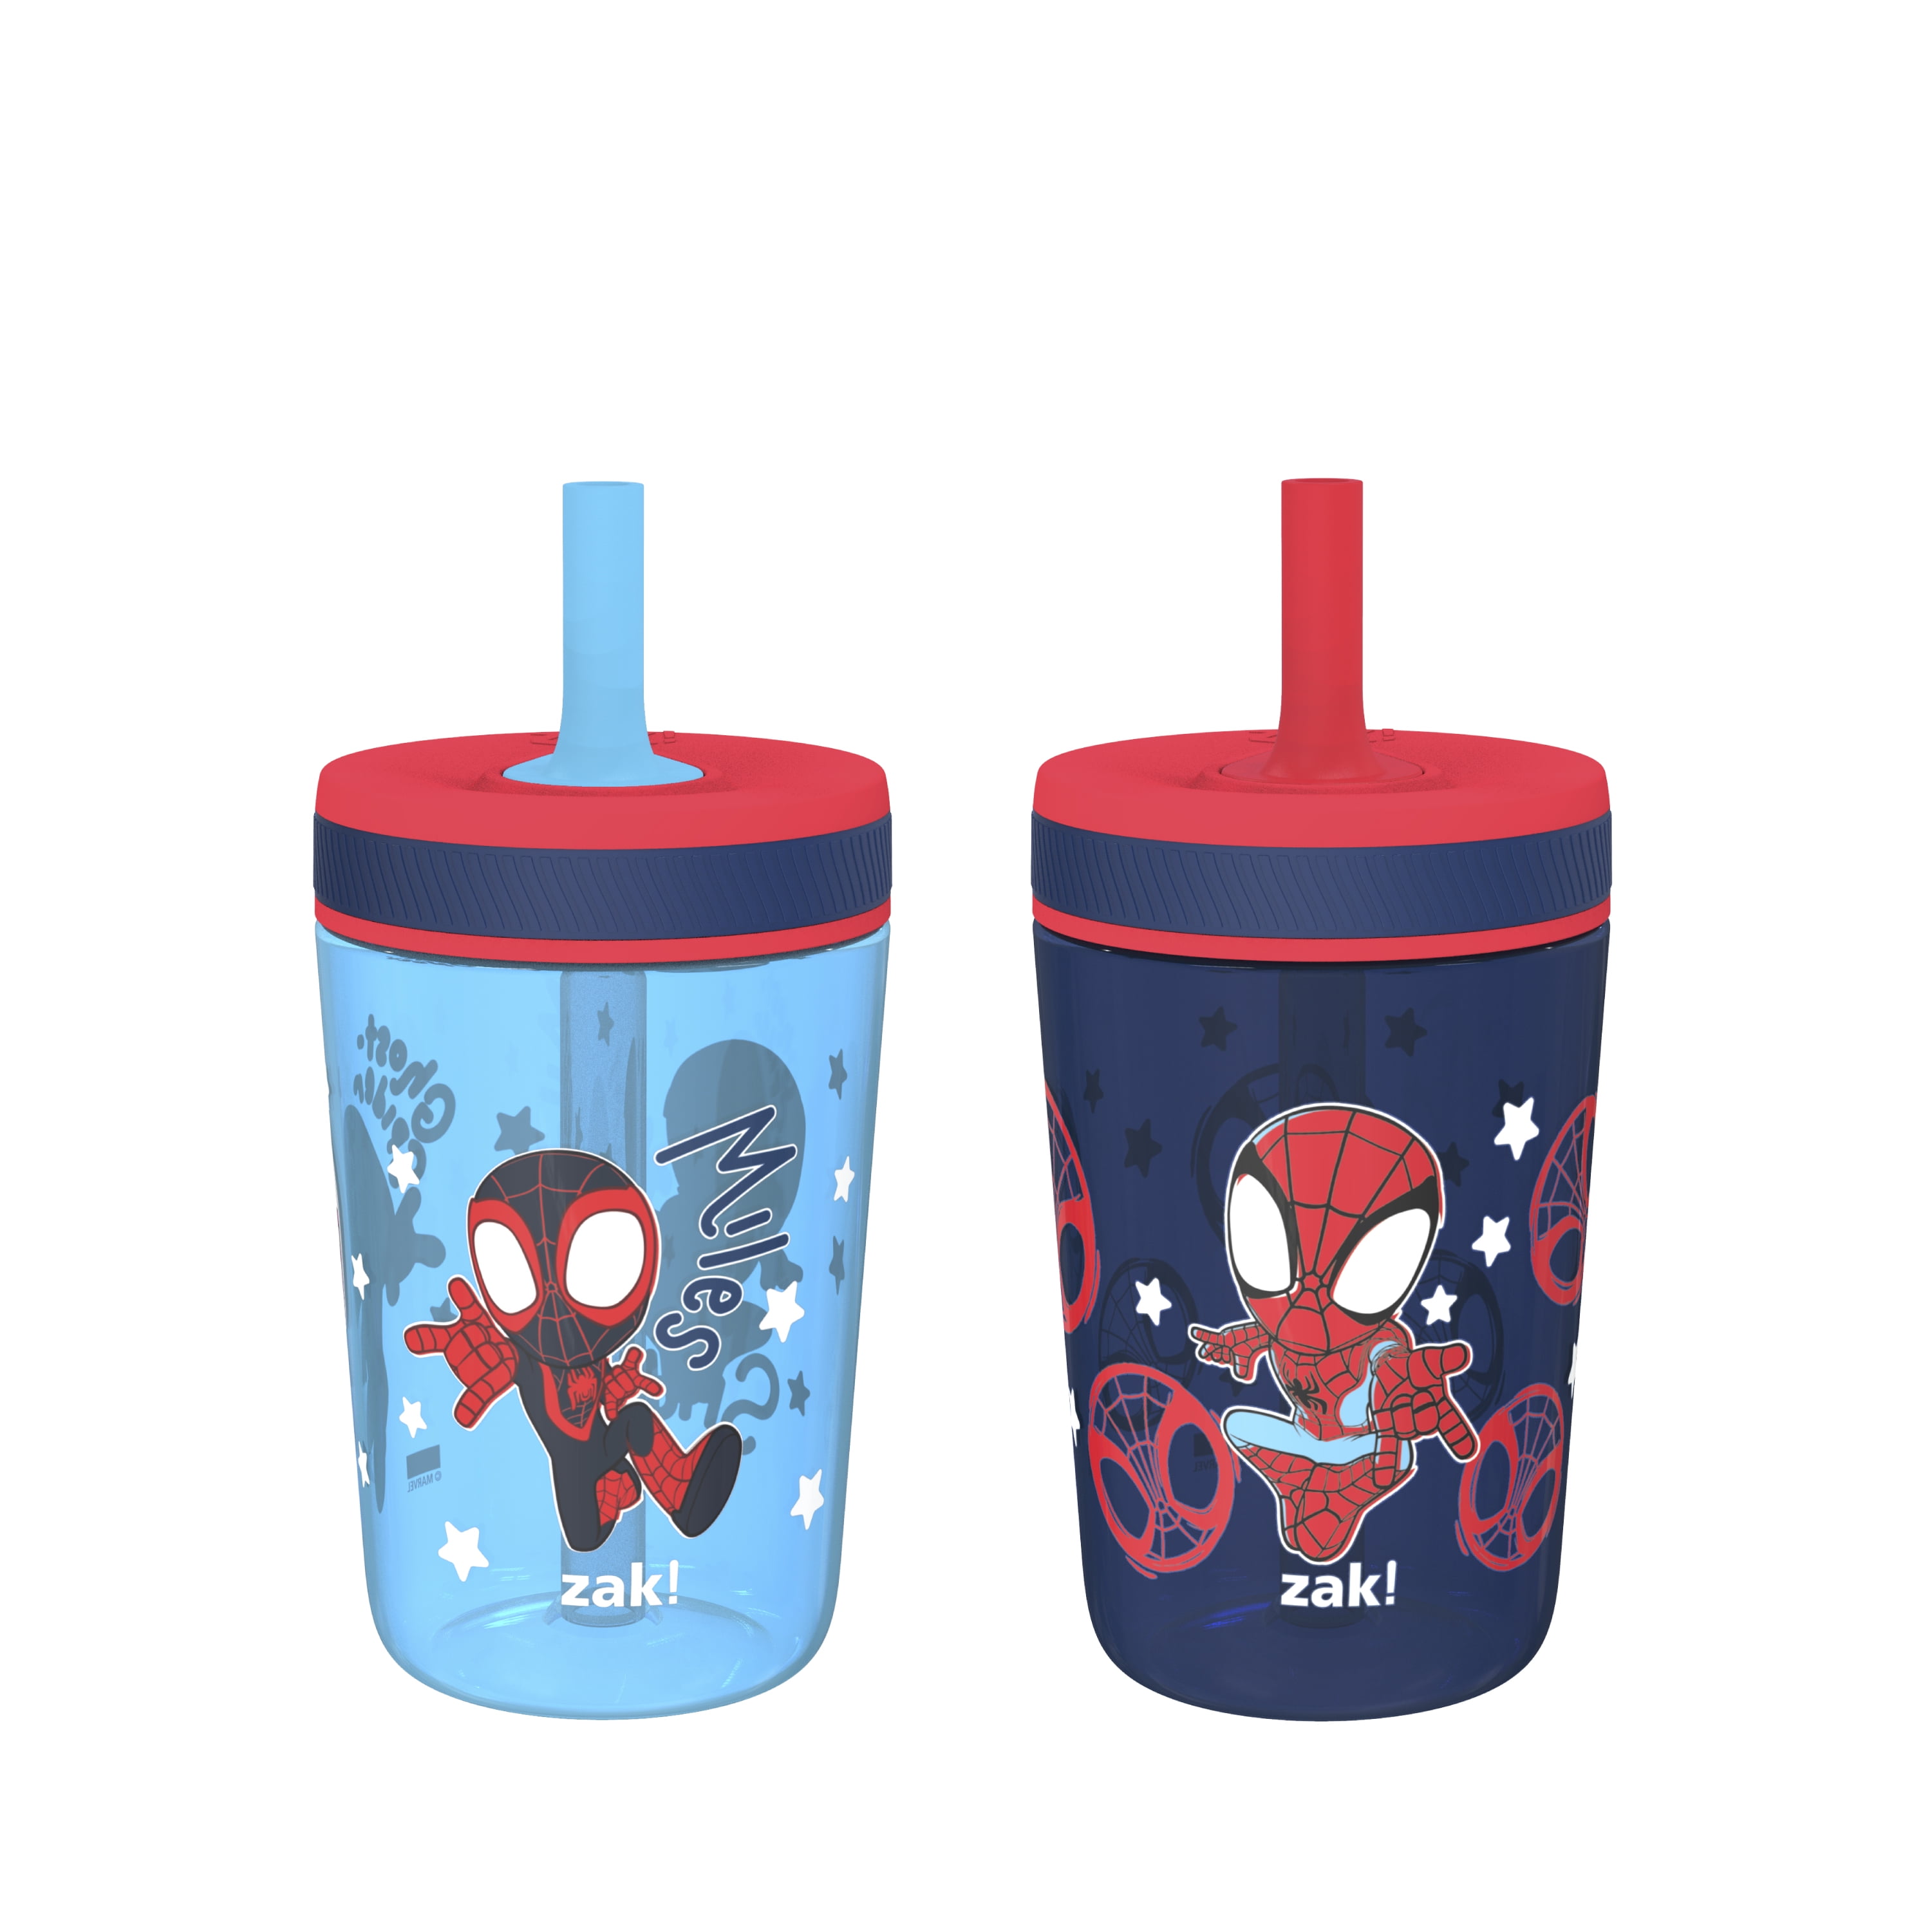 Spiderman Mug, Spiderman Cup, Kid Mug, Superhero Kid Cup, Superhero Mug,  Toddler Gift, Campfire Mug, Hot Chocolate Mug, Toddler Mug 